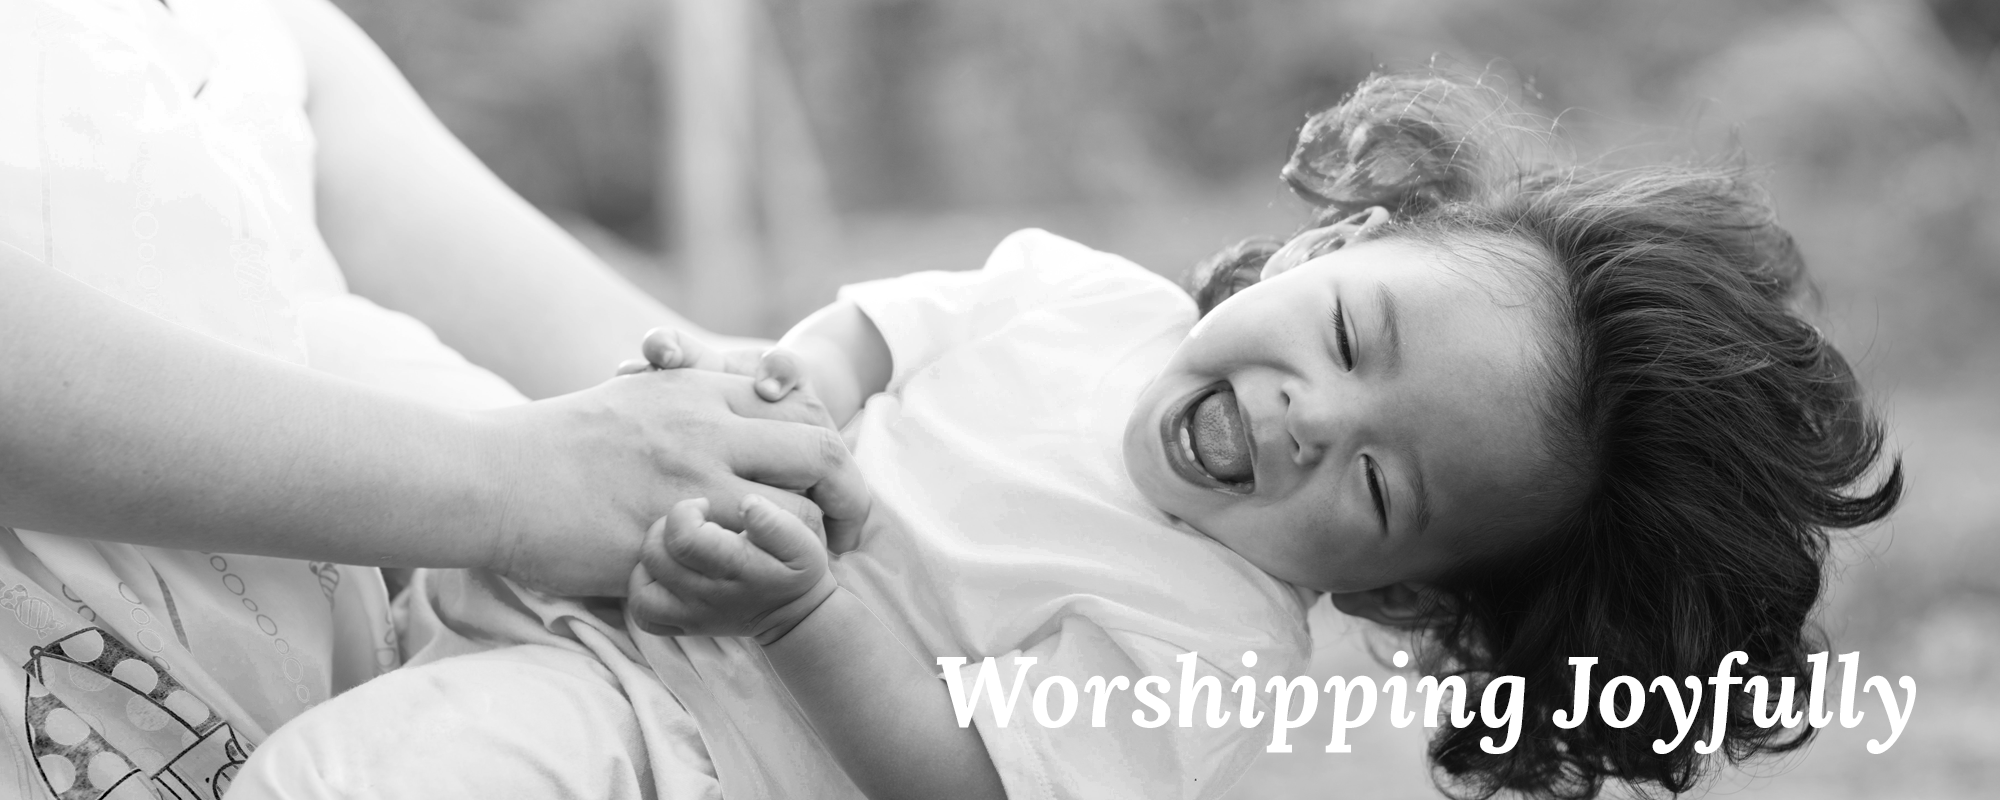 Worshipping Joyfully